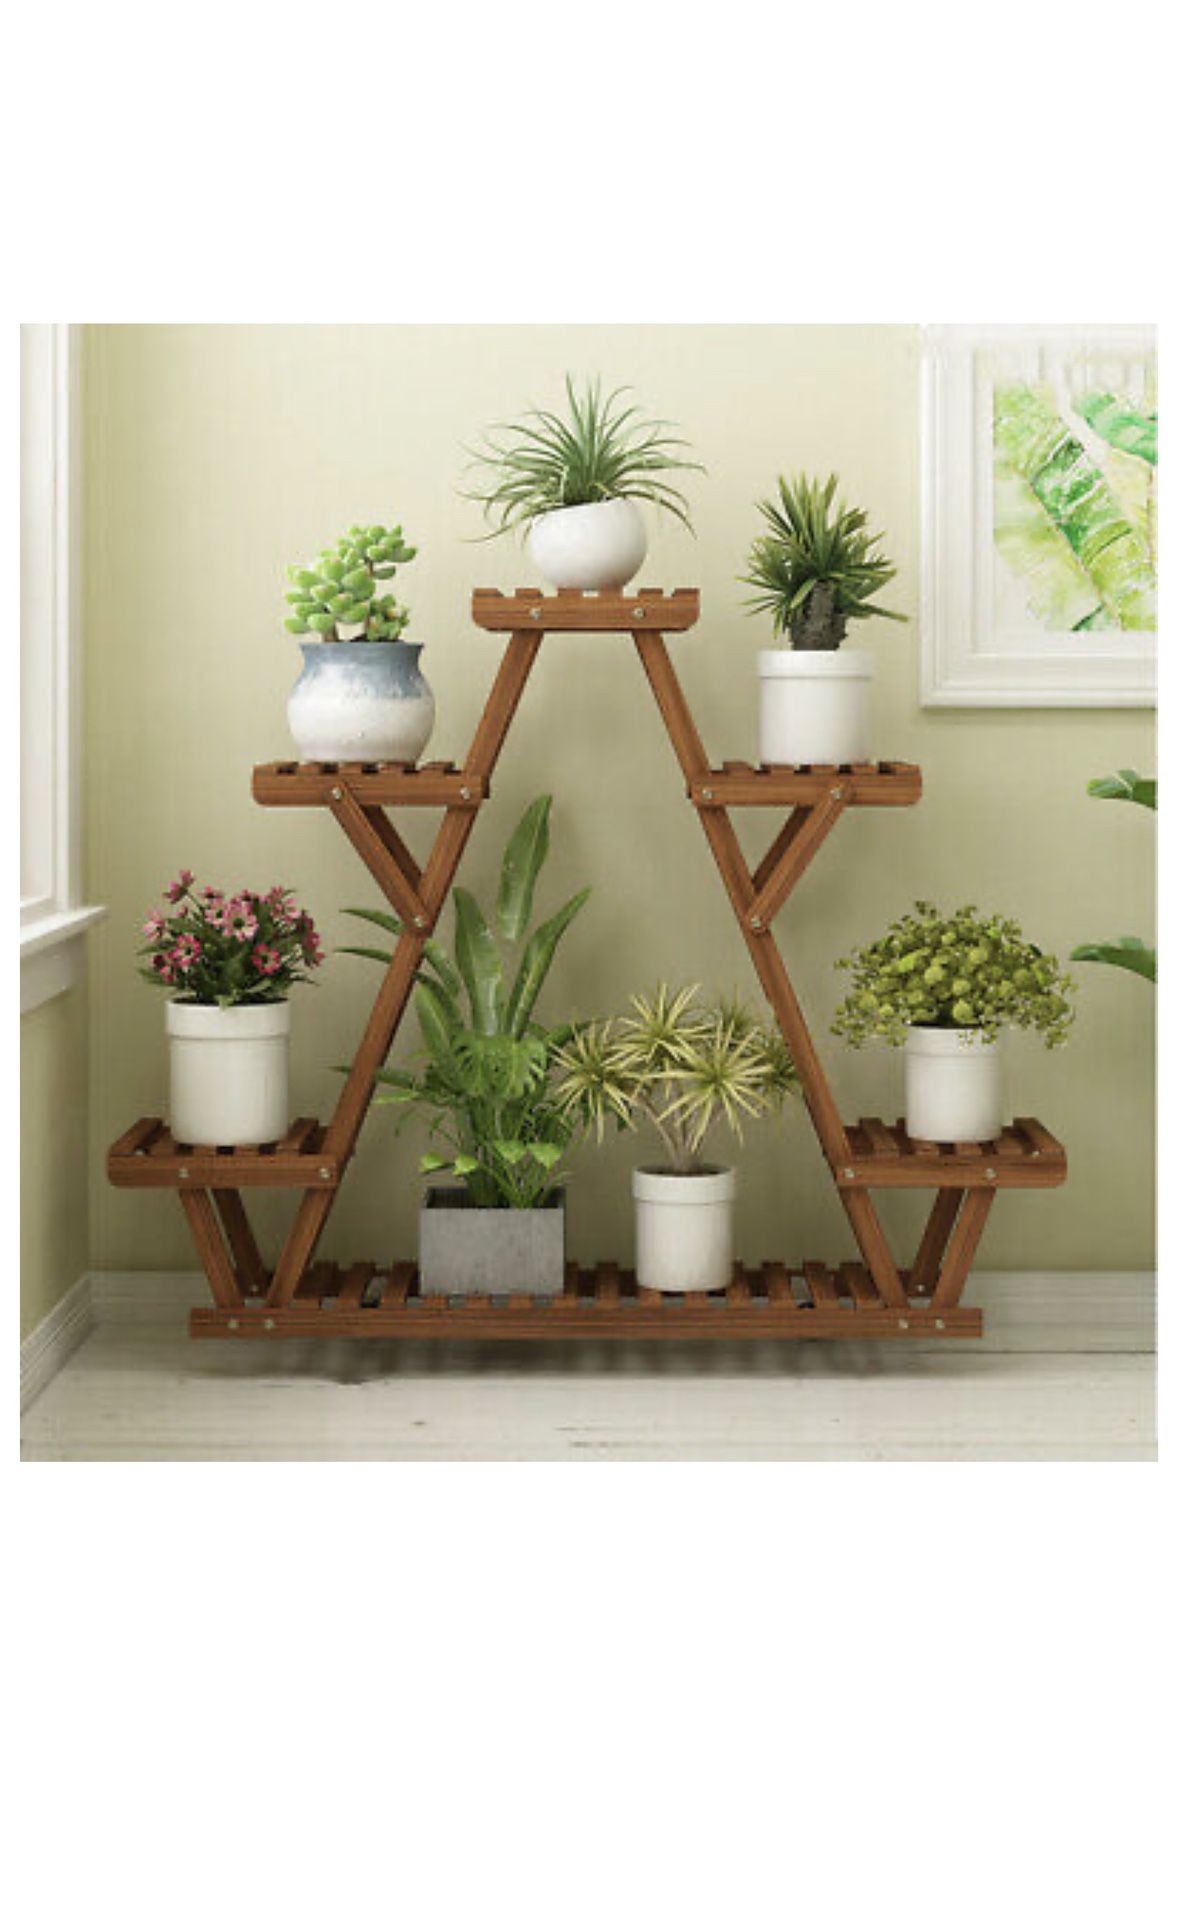 Carbonized Triangle 6 Tier Corner Wood Plant Stand Flower Pots Rack Shelf Holder